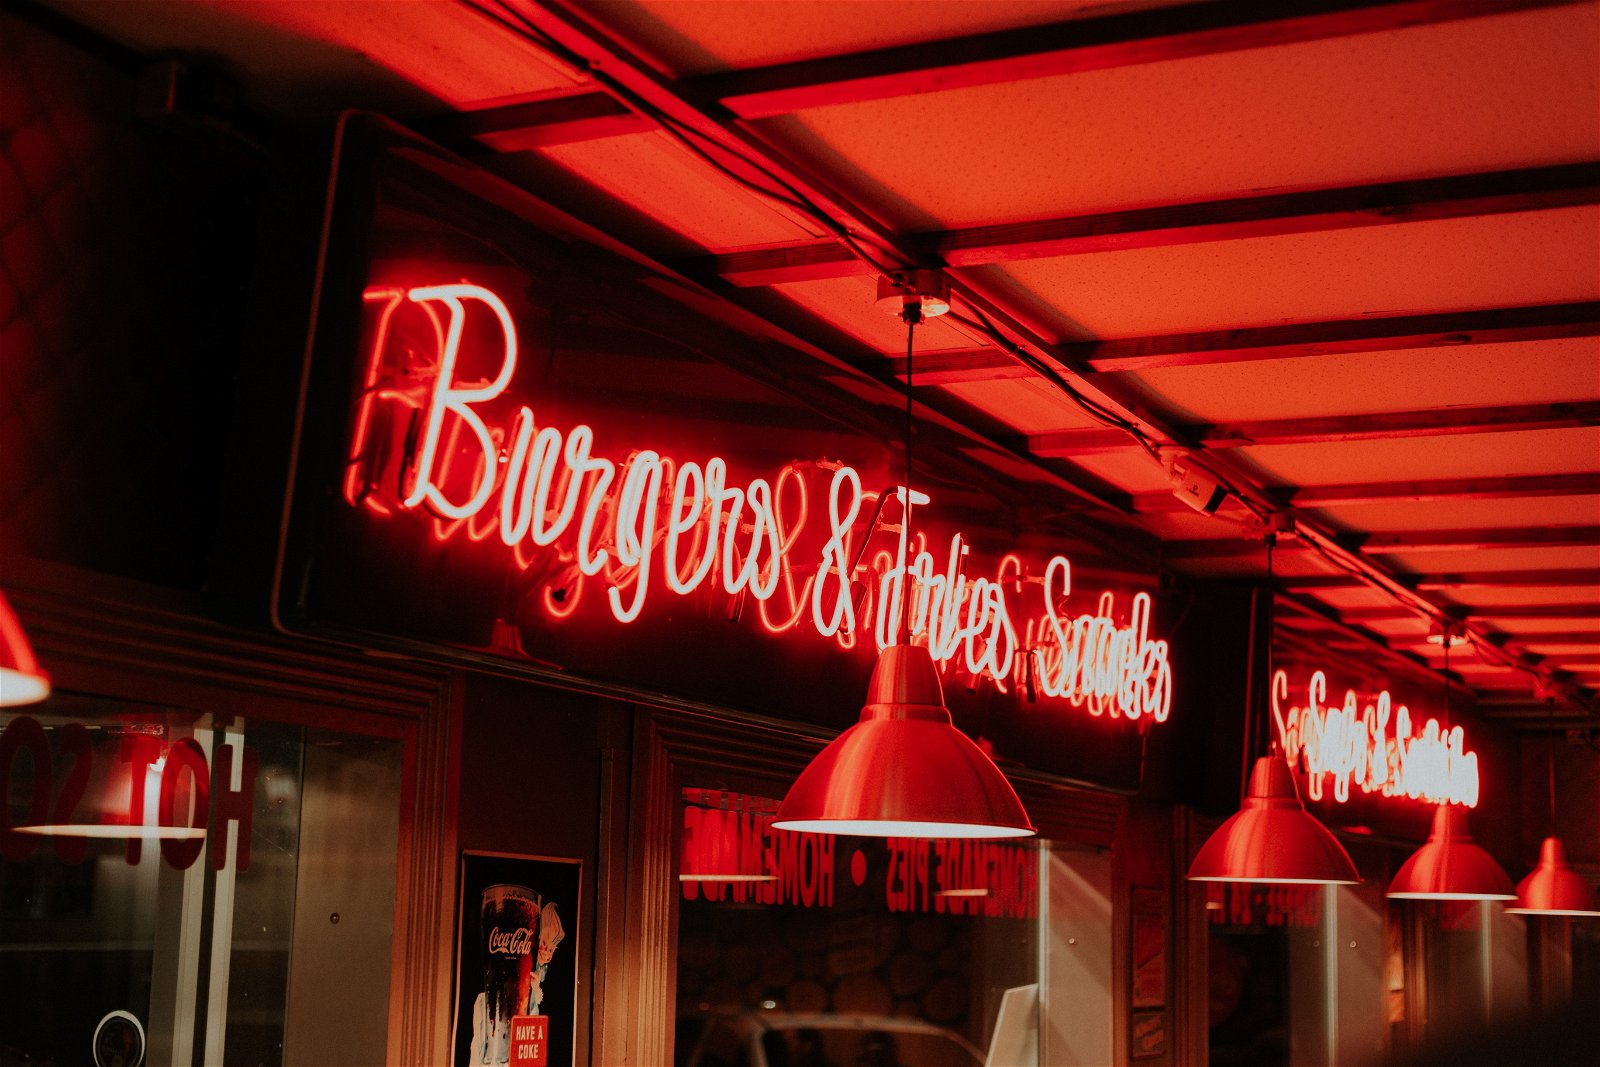 Figure 5: Restaurant Neon sign by Priscilla Du Preez.